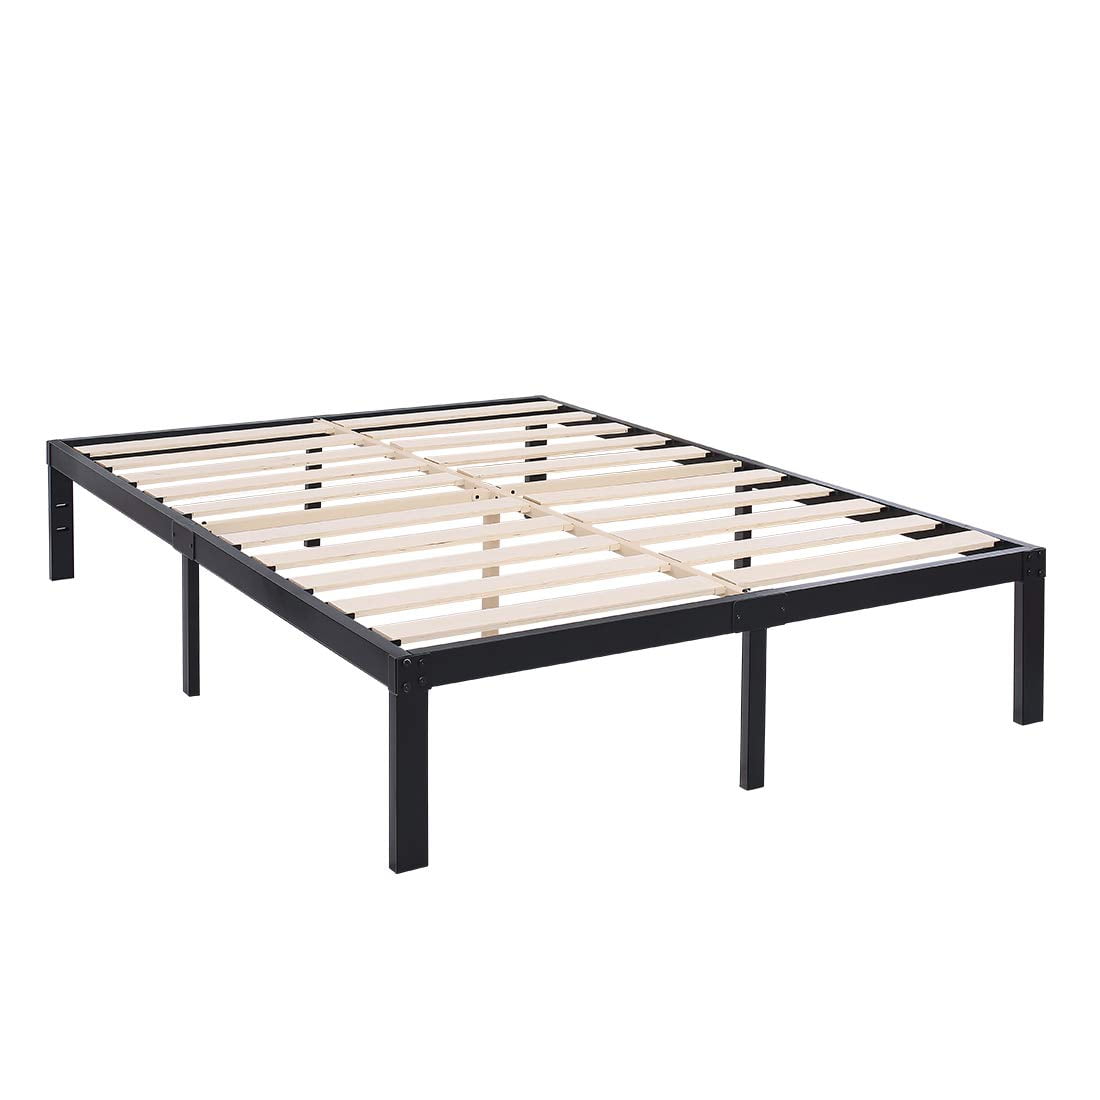 TATAGO 3000lbs 16 inch Platform Metal Bed Frame Mattress Foundation Queen Size 